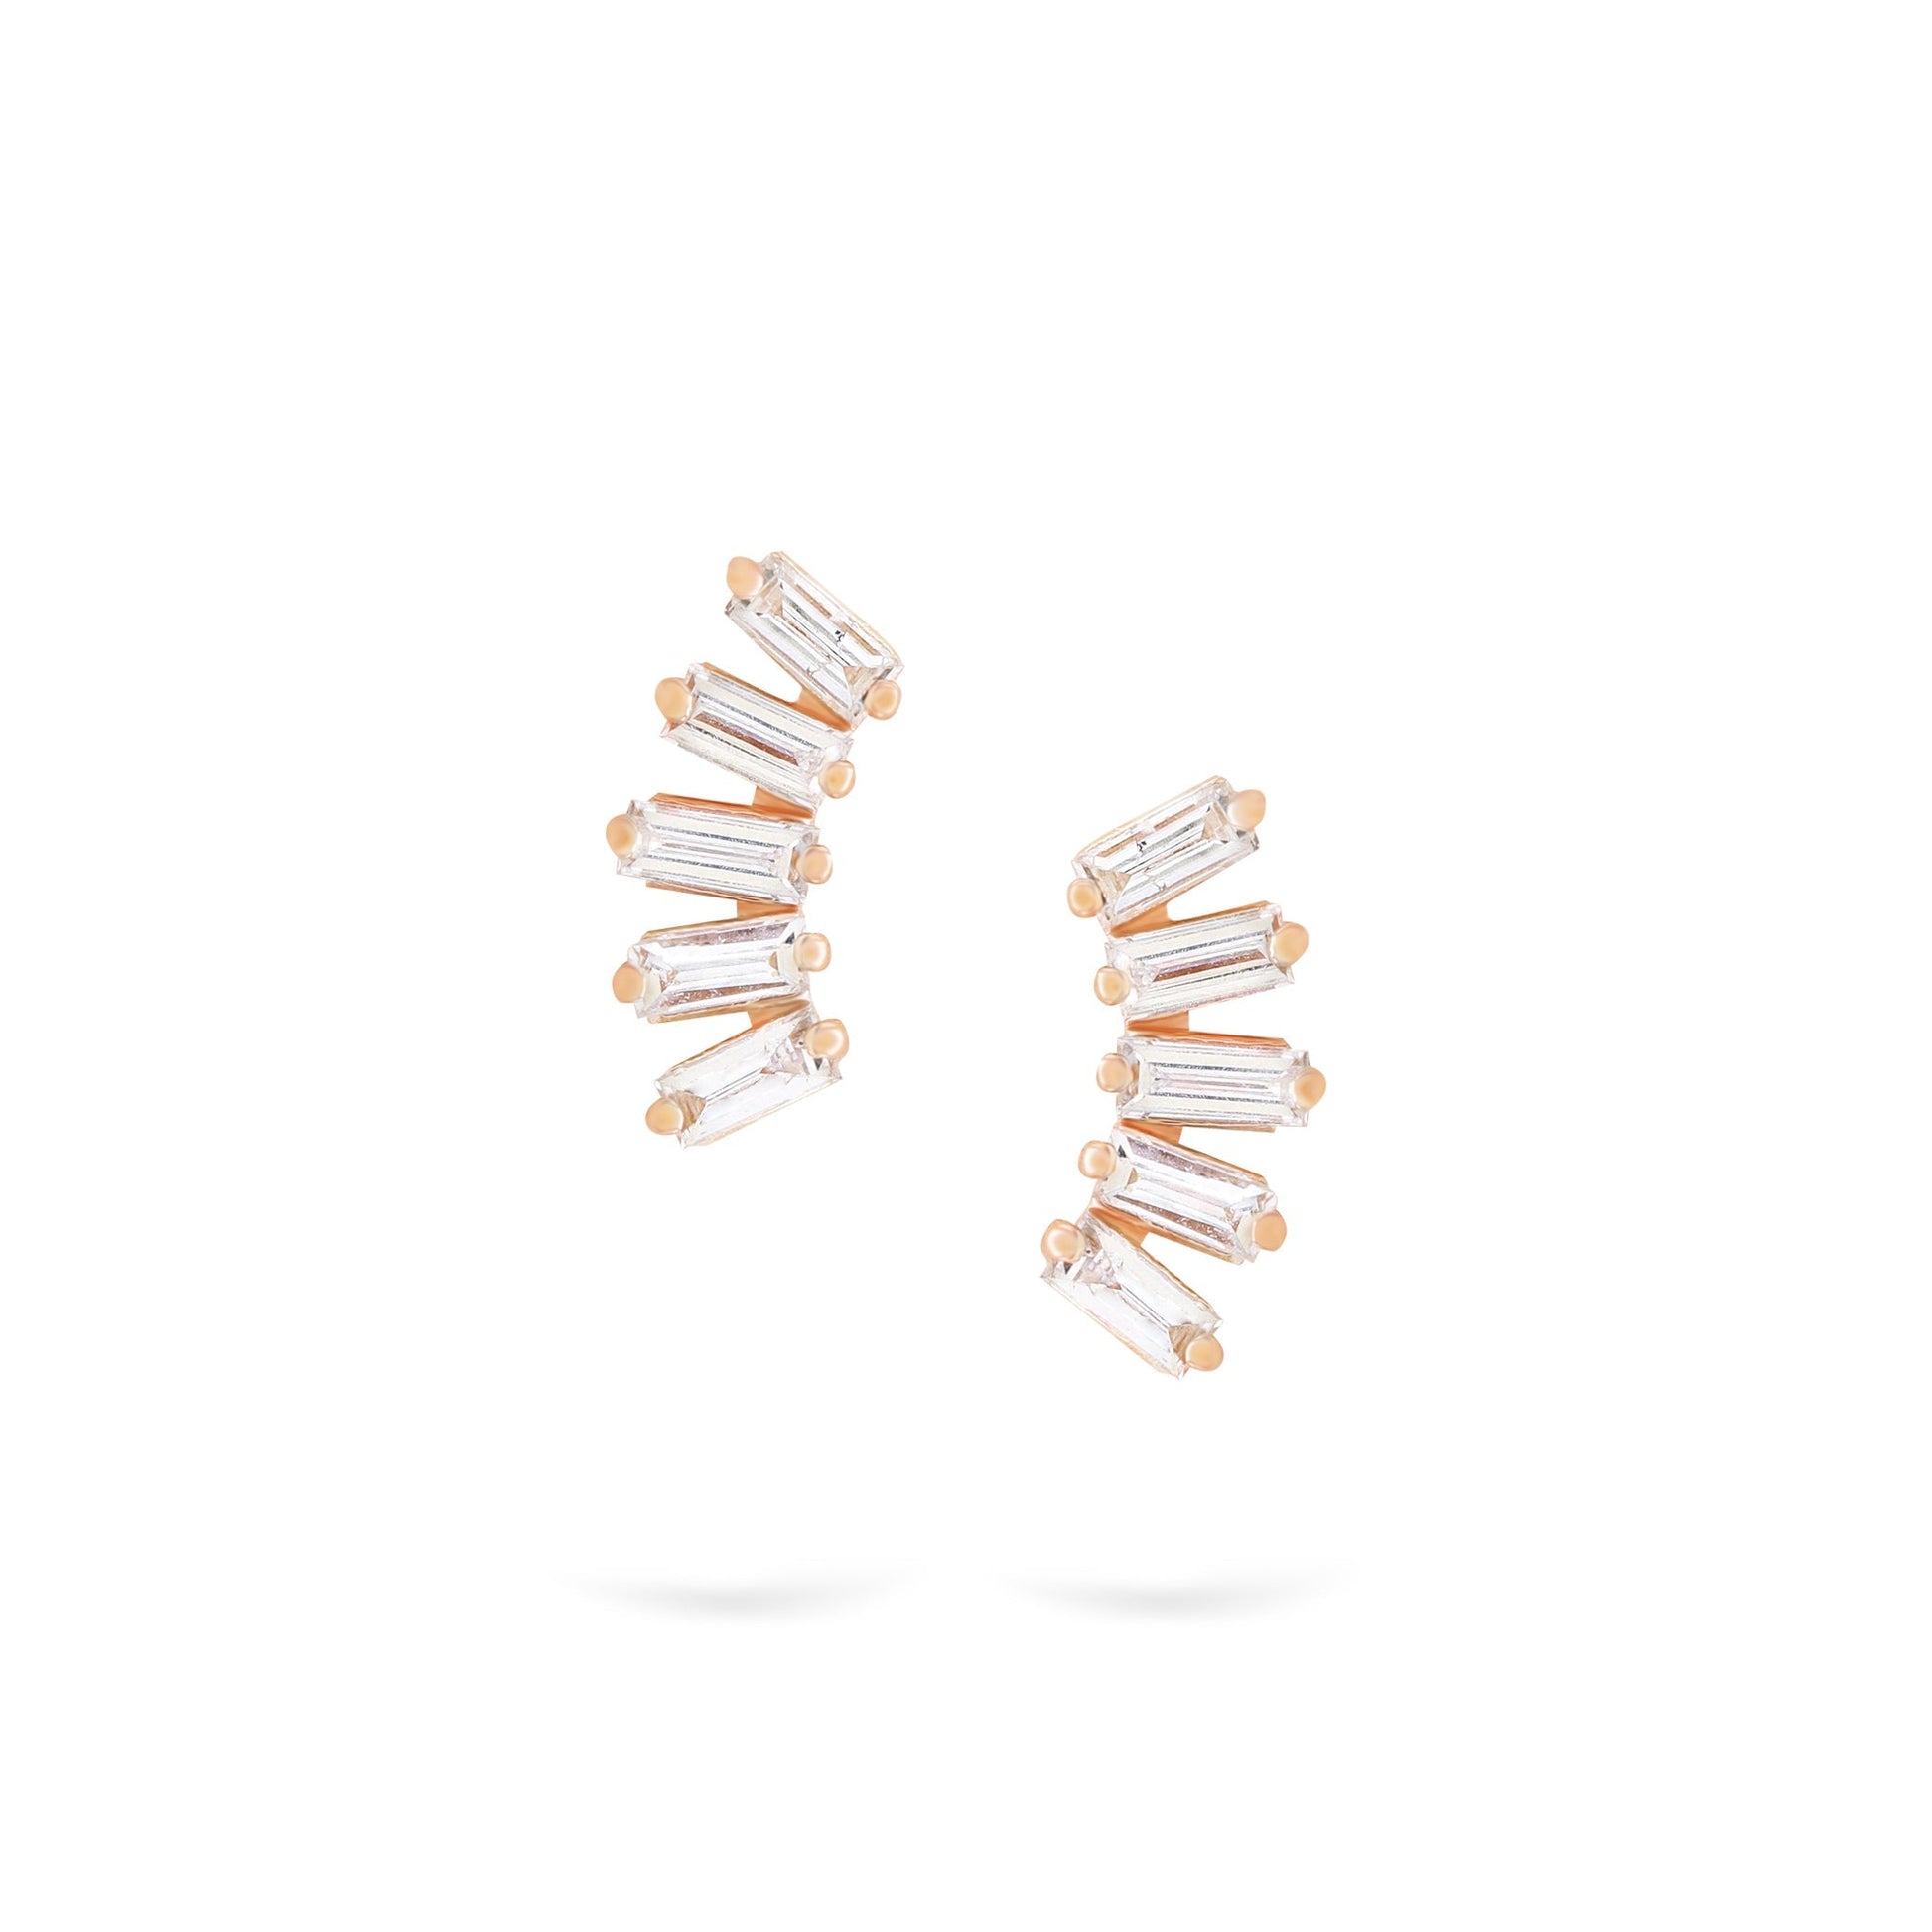 Gilda Jewelry Baguette Studs | Diamond Earrings | 14K Gold - Rose / Pair: 0.22 Cts. | Cut - earrings Zengoda Shop